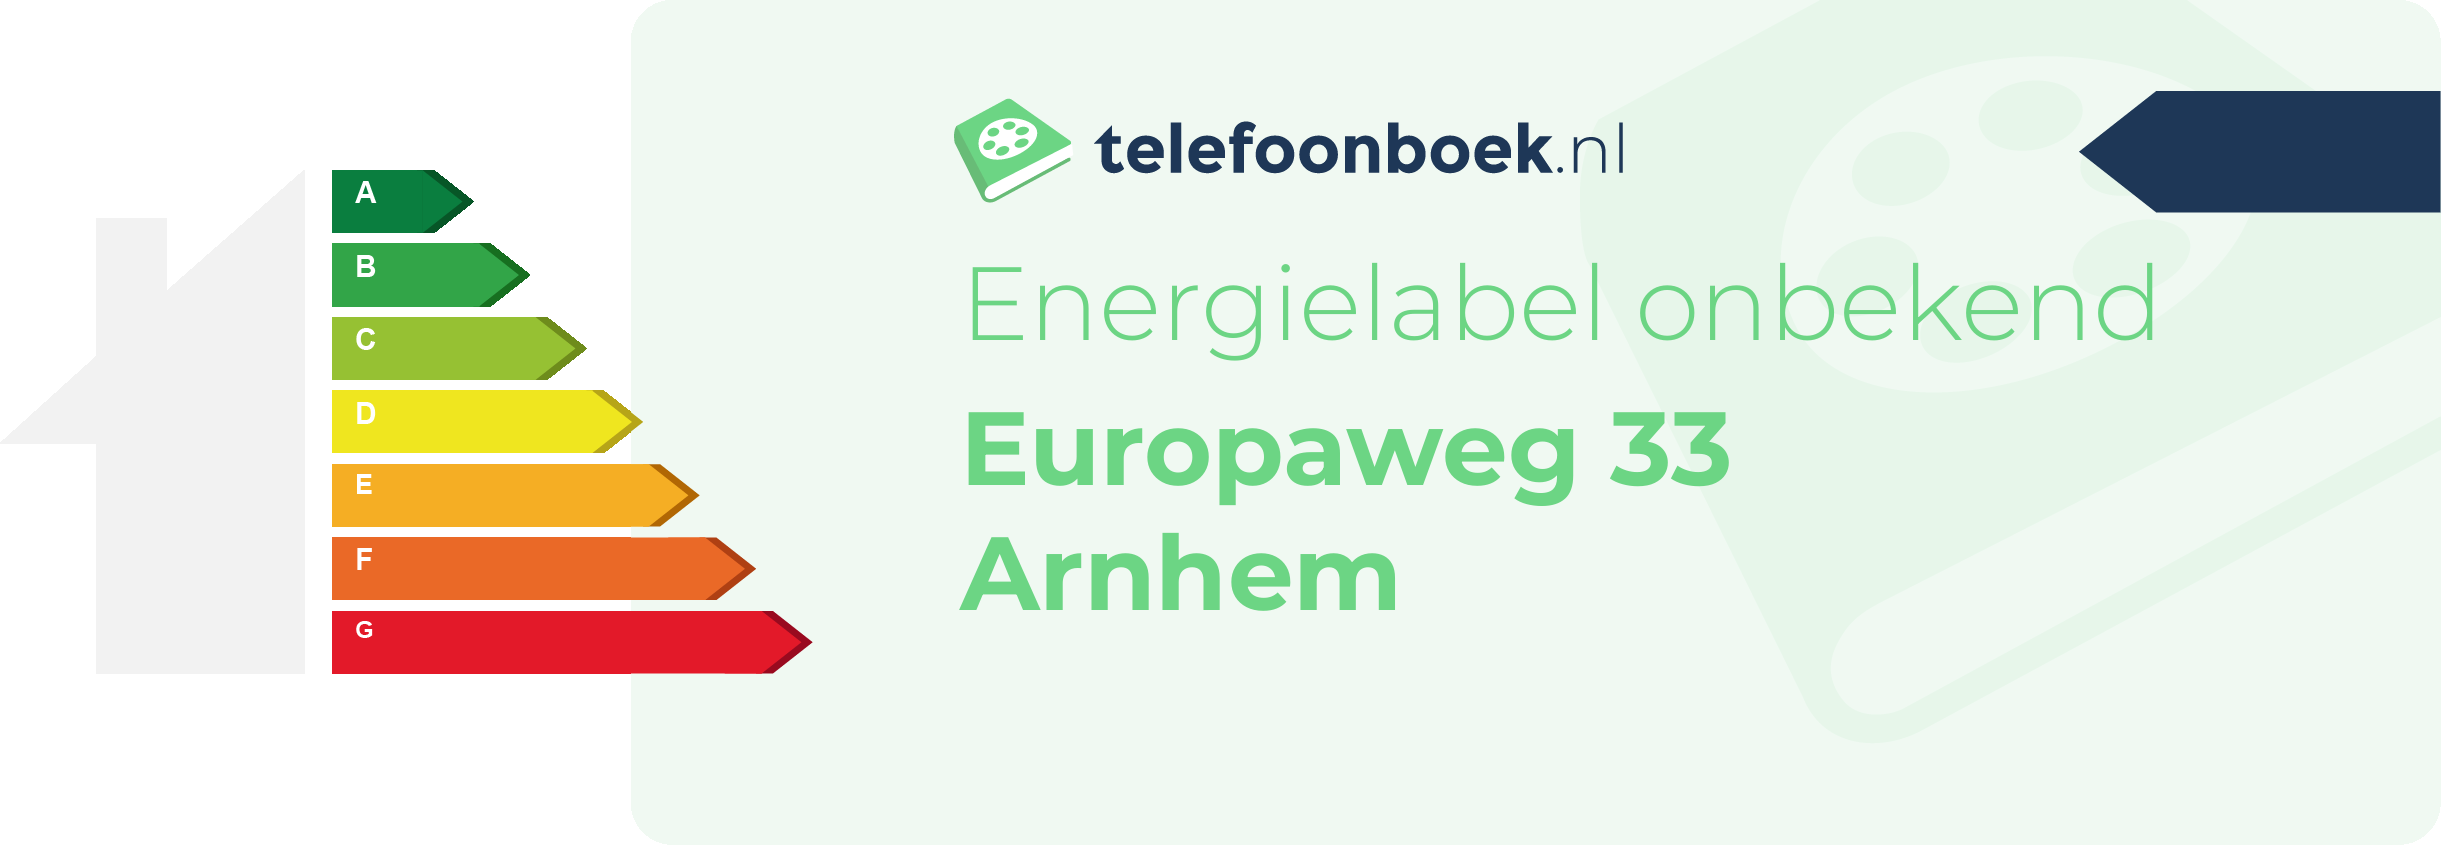 Energielabel Europaweg 33 Arnhem